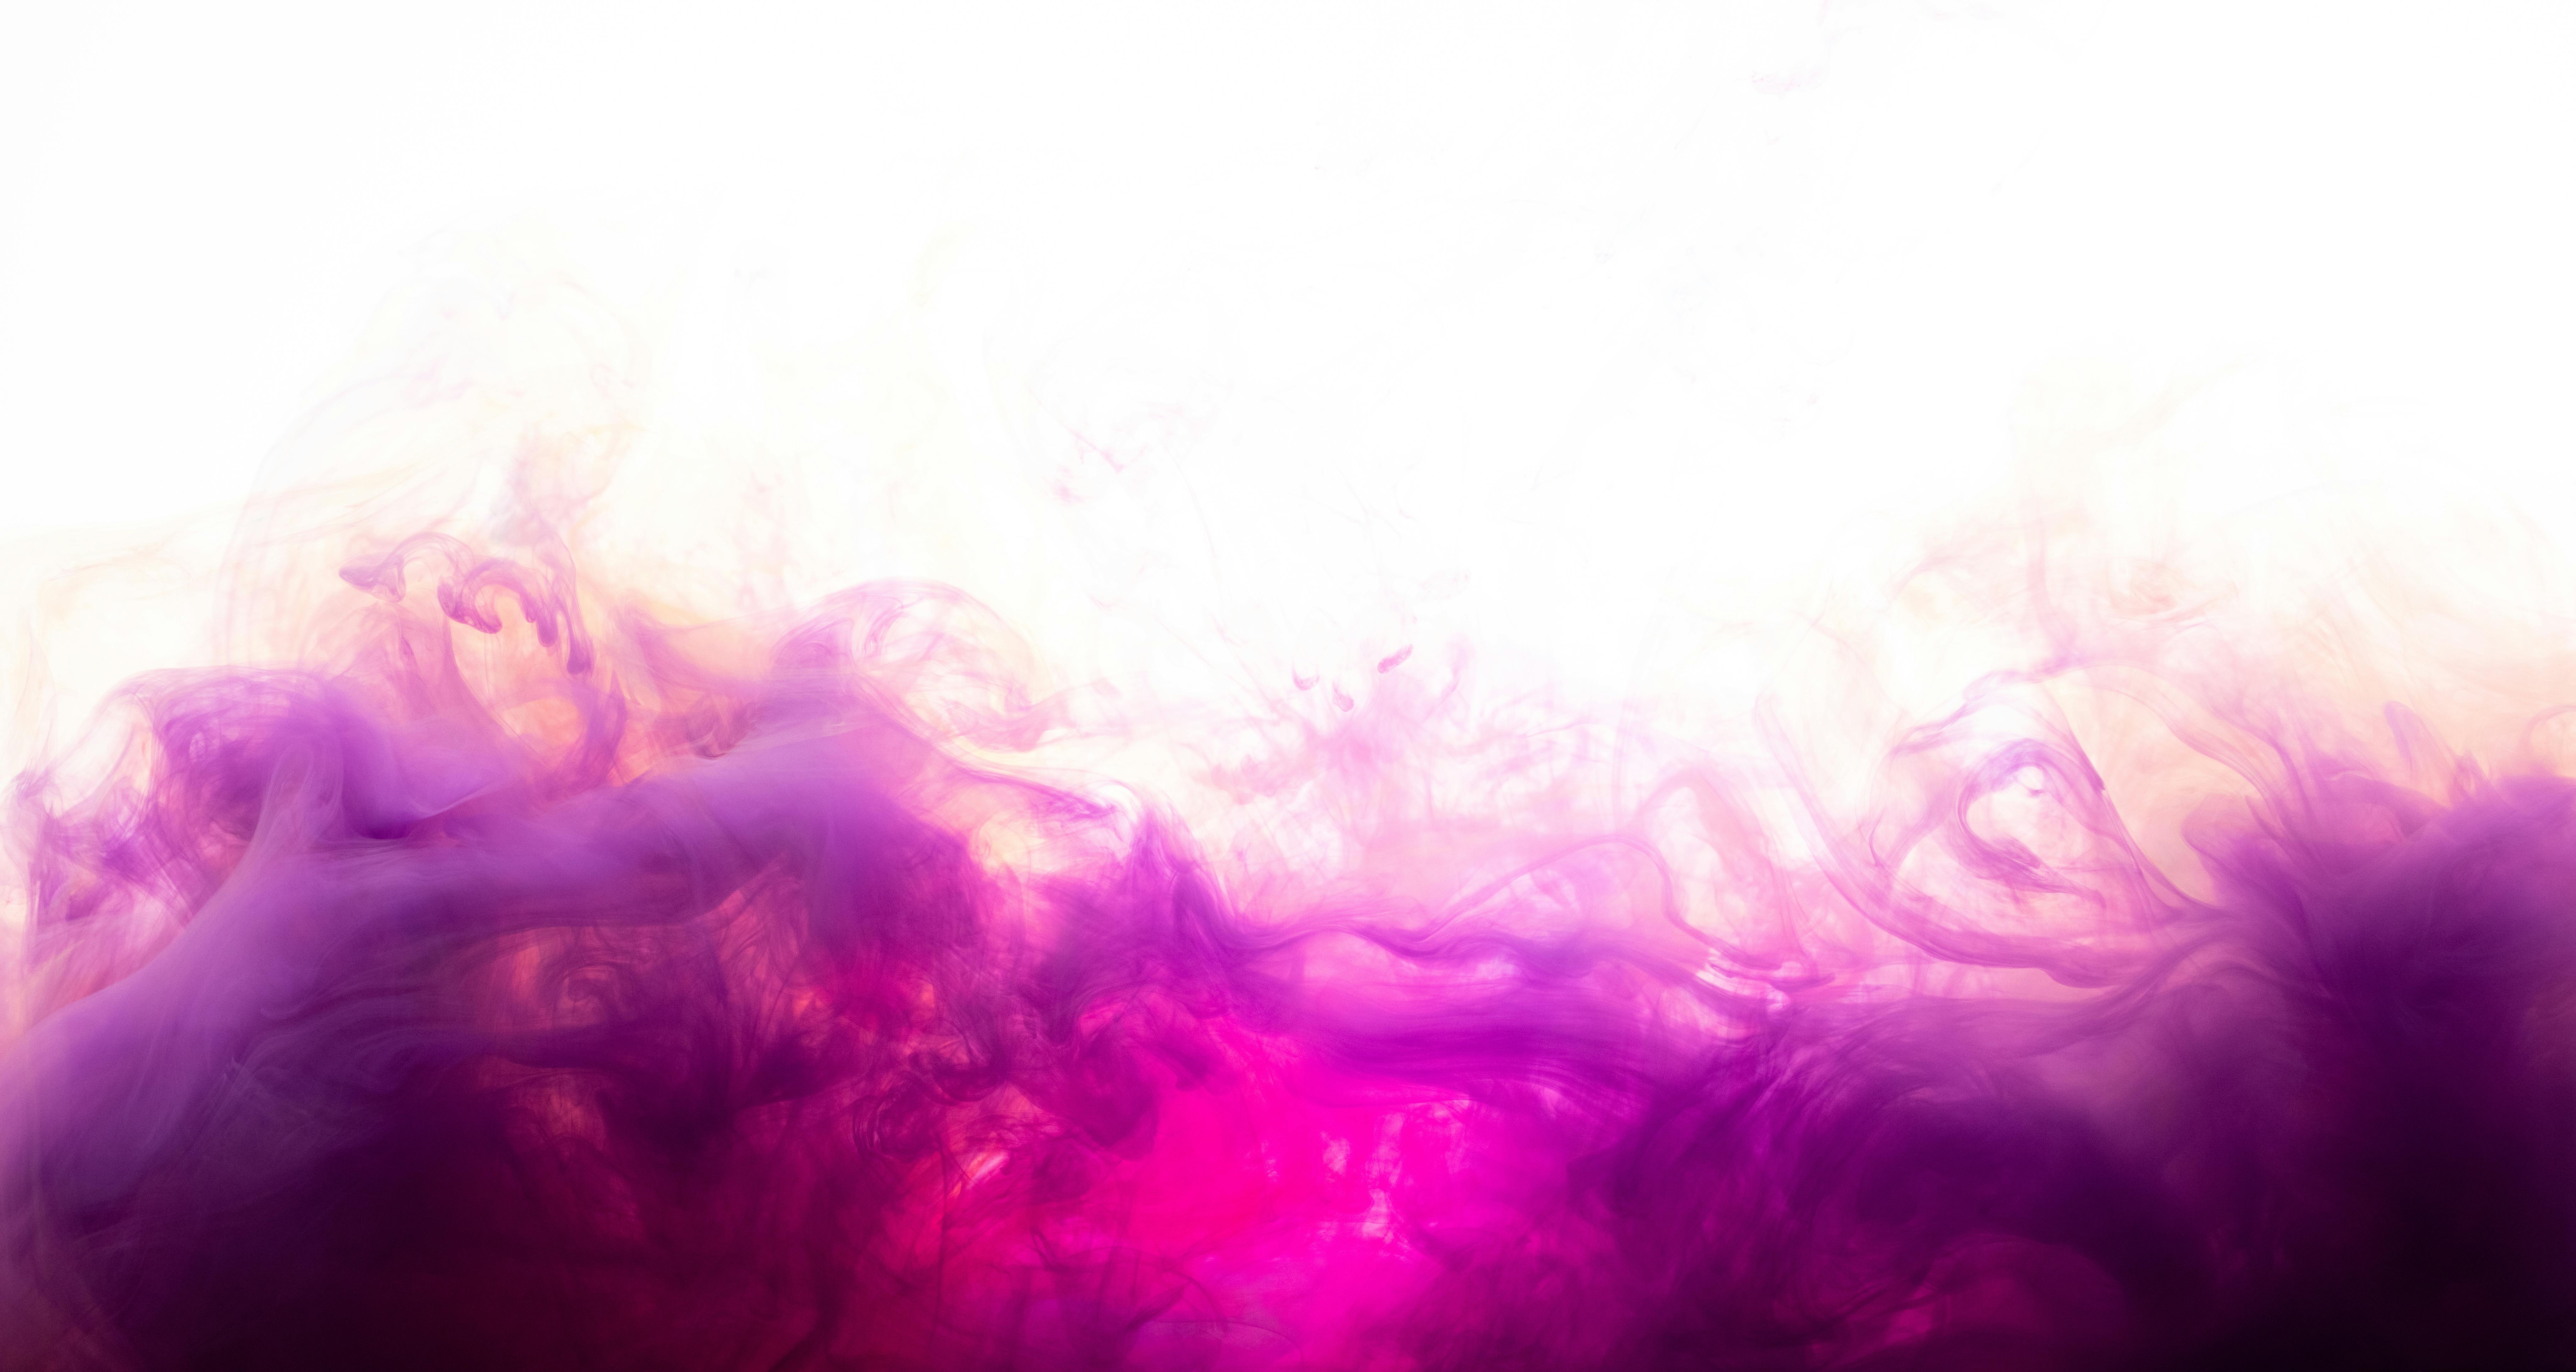 Purple Smoke on White Background · Free Stock Photo